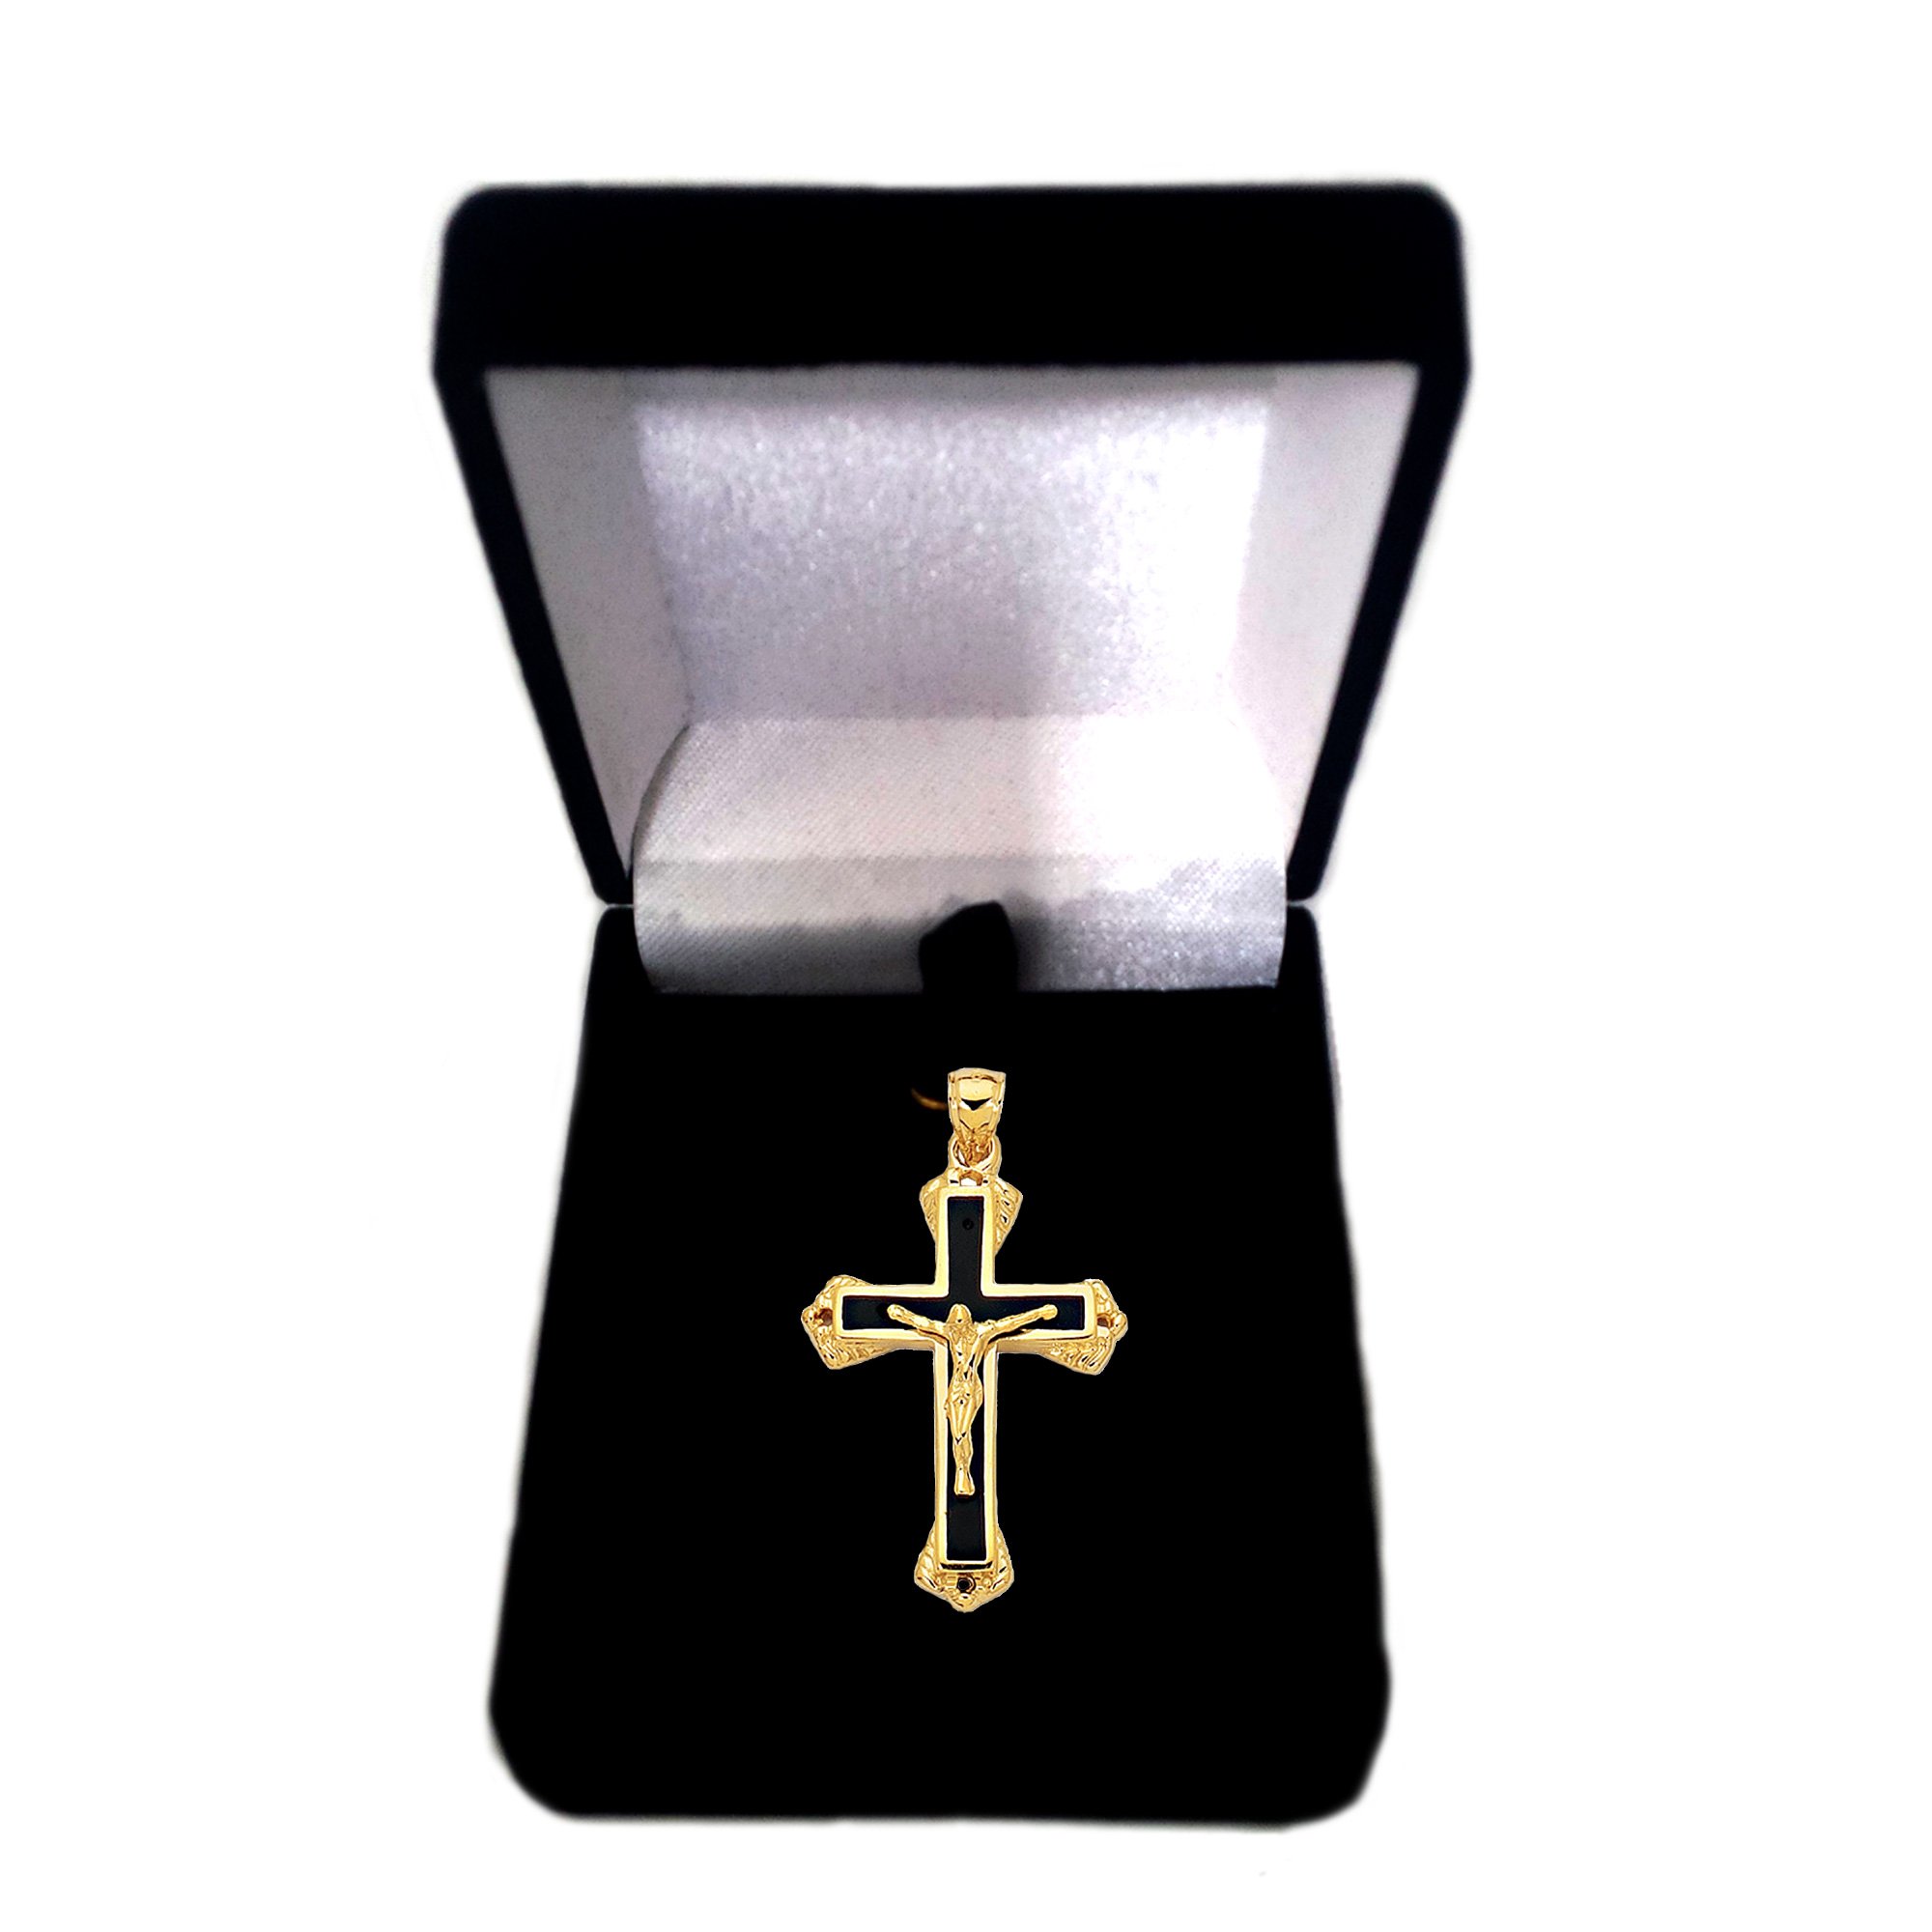 Jewelry Affairs 14k Yellow Gold And Black Enamel Crucifix Jesus Religious Cross Mens Charm Pendant